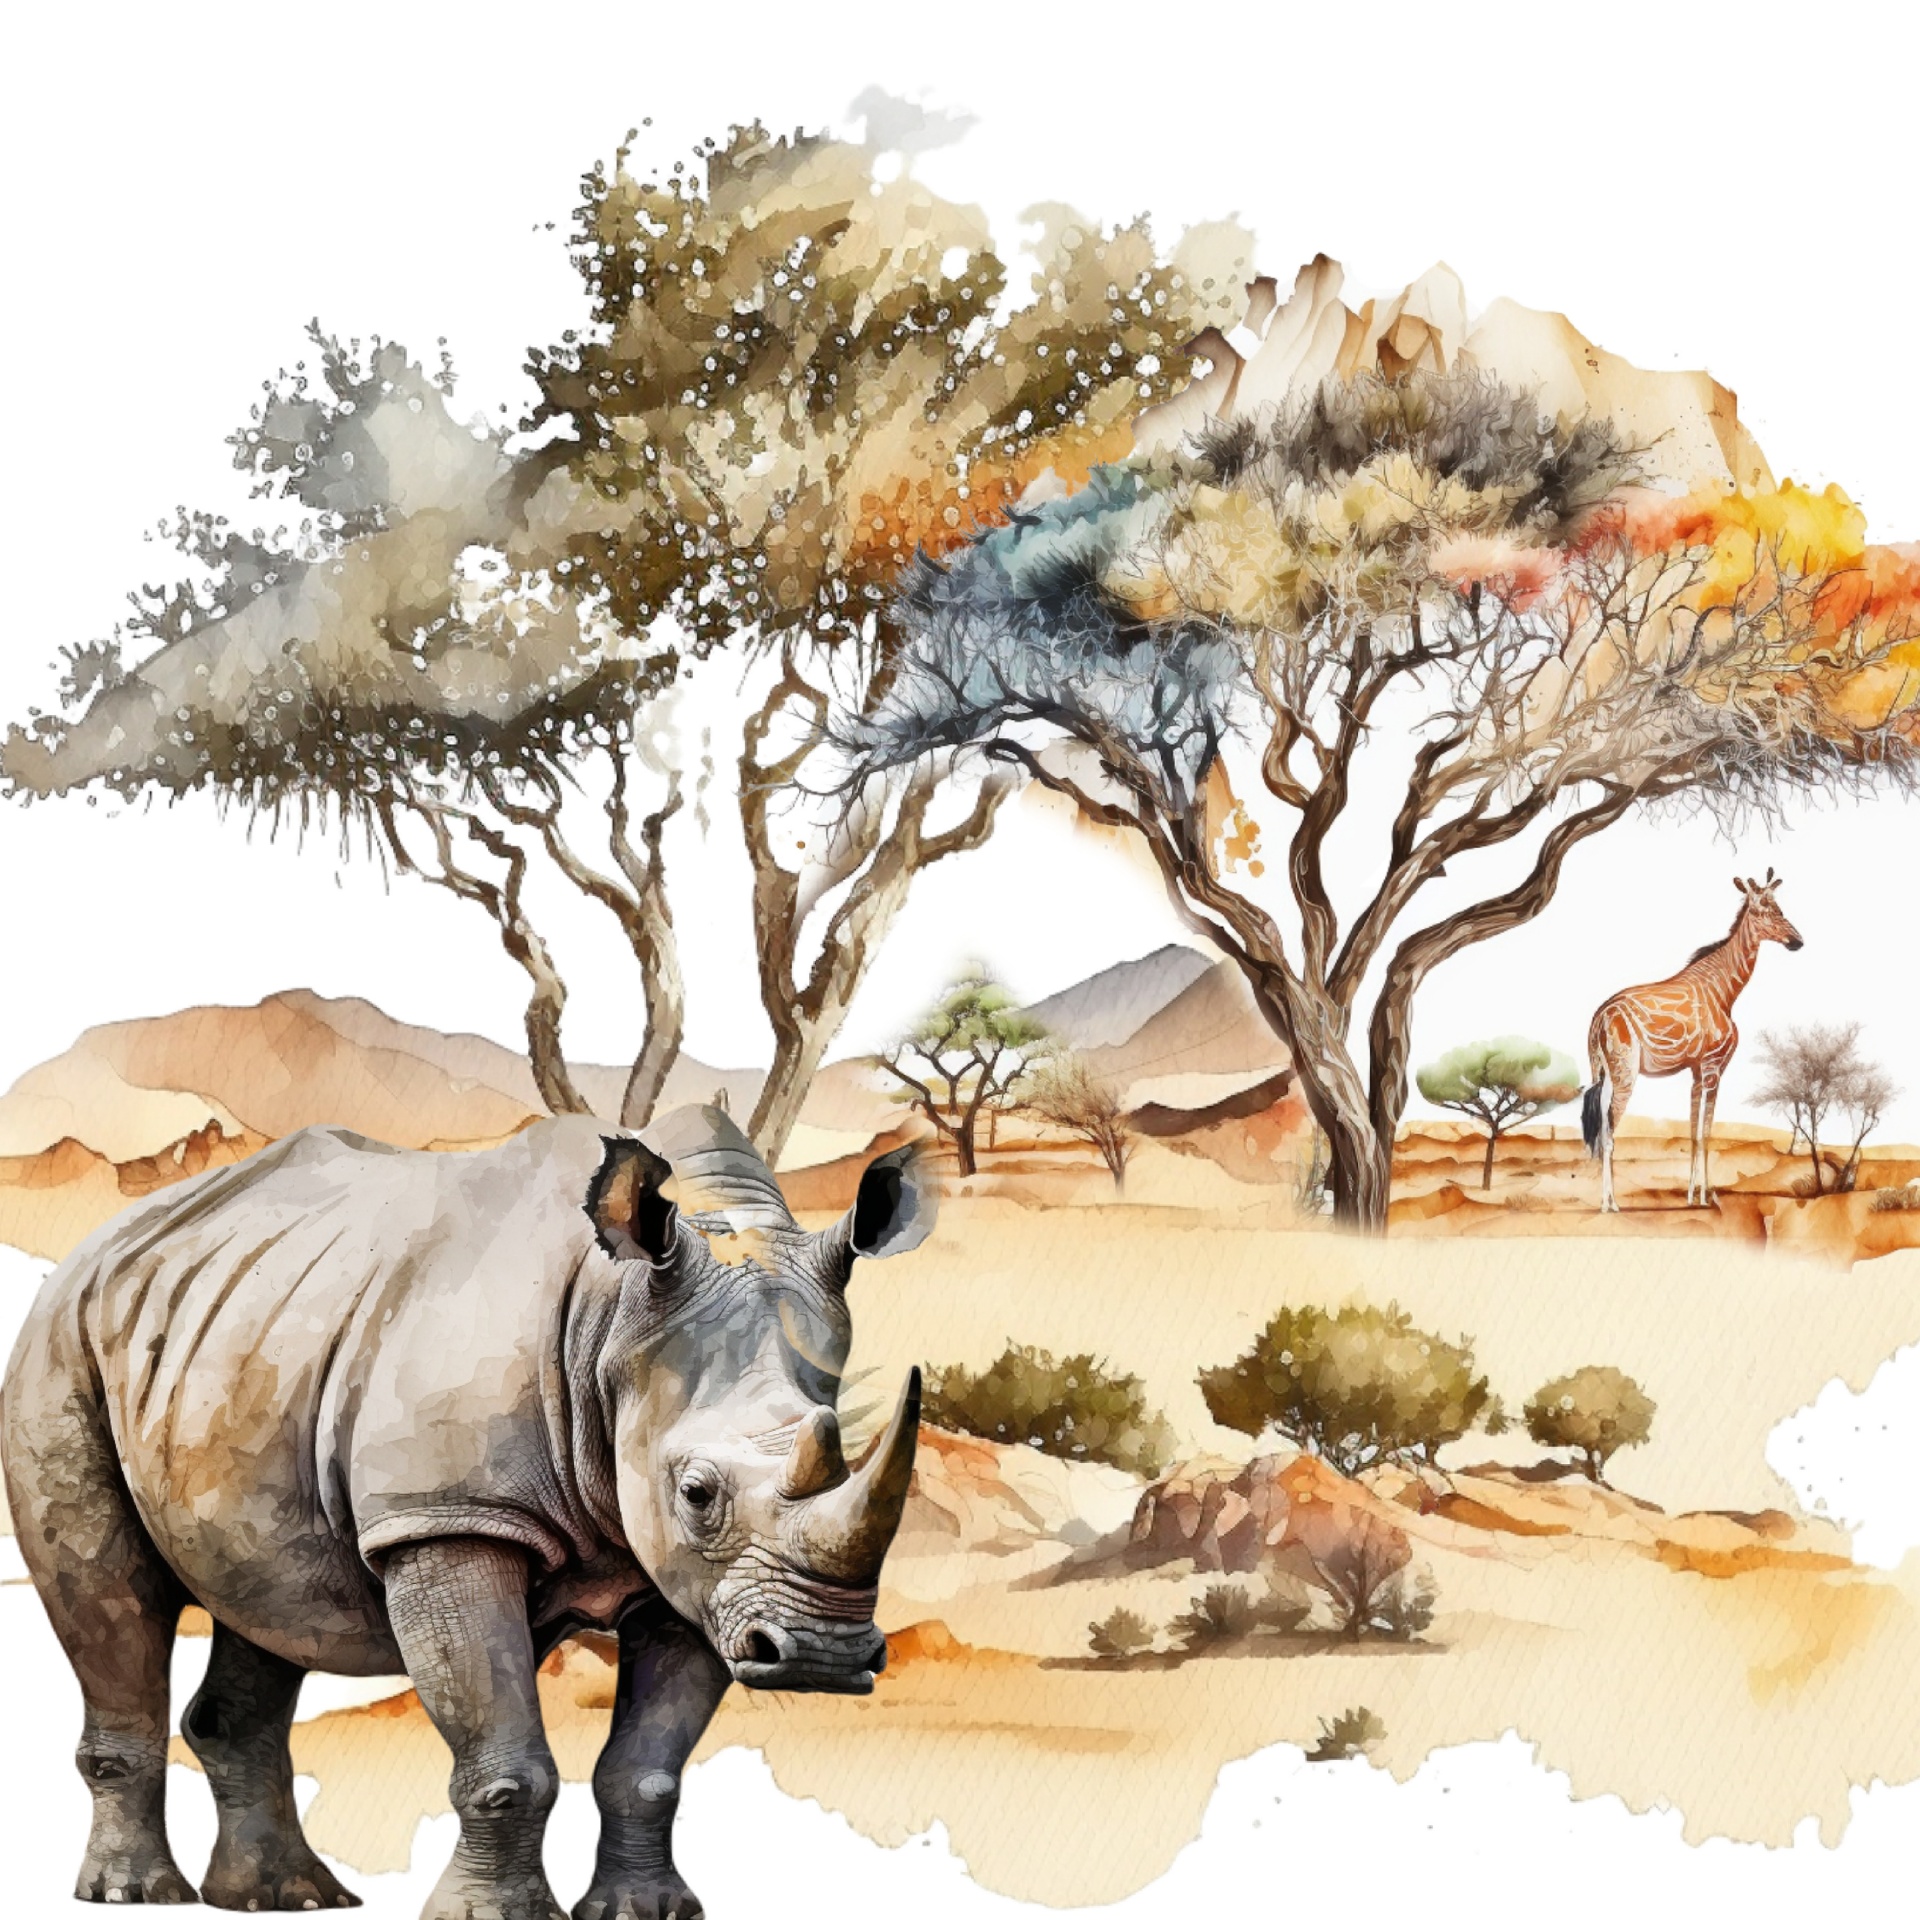 a rhino and giraffe on savannah by baobab trees in Africa